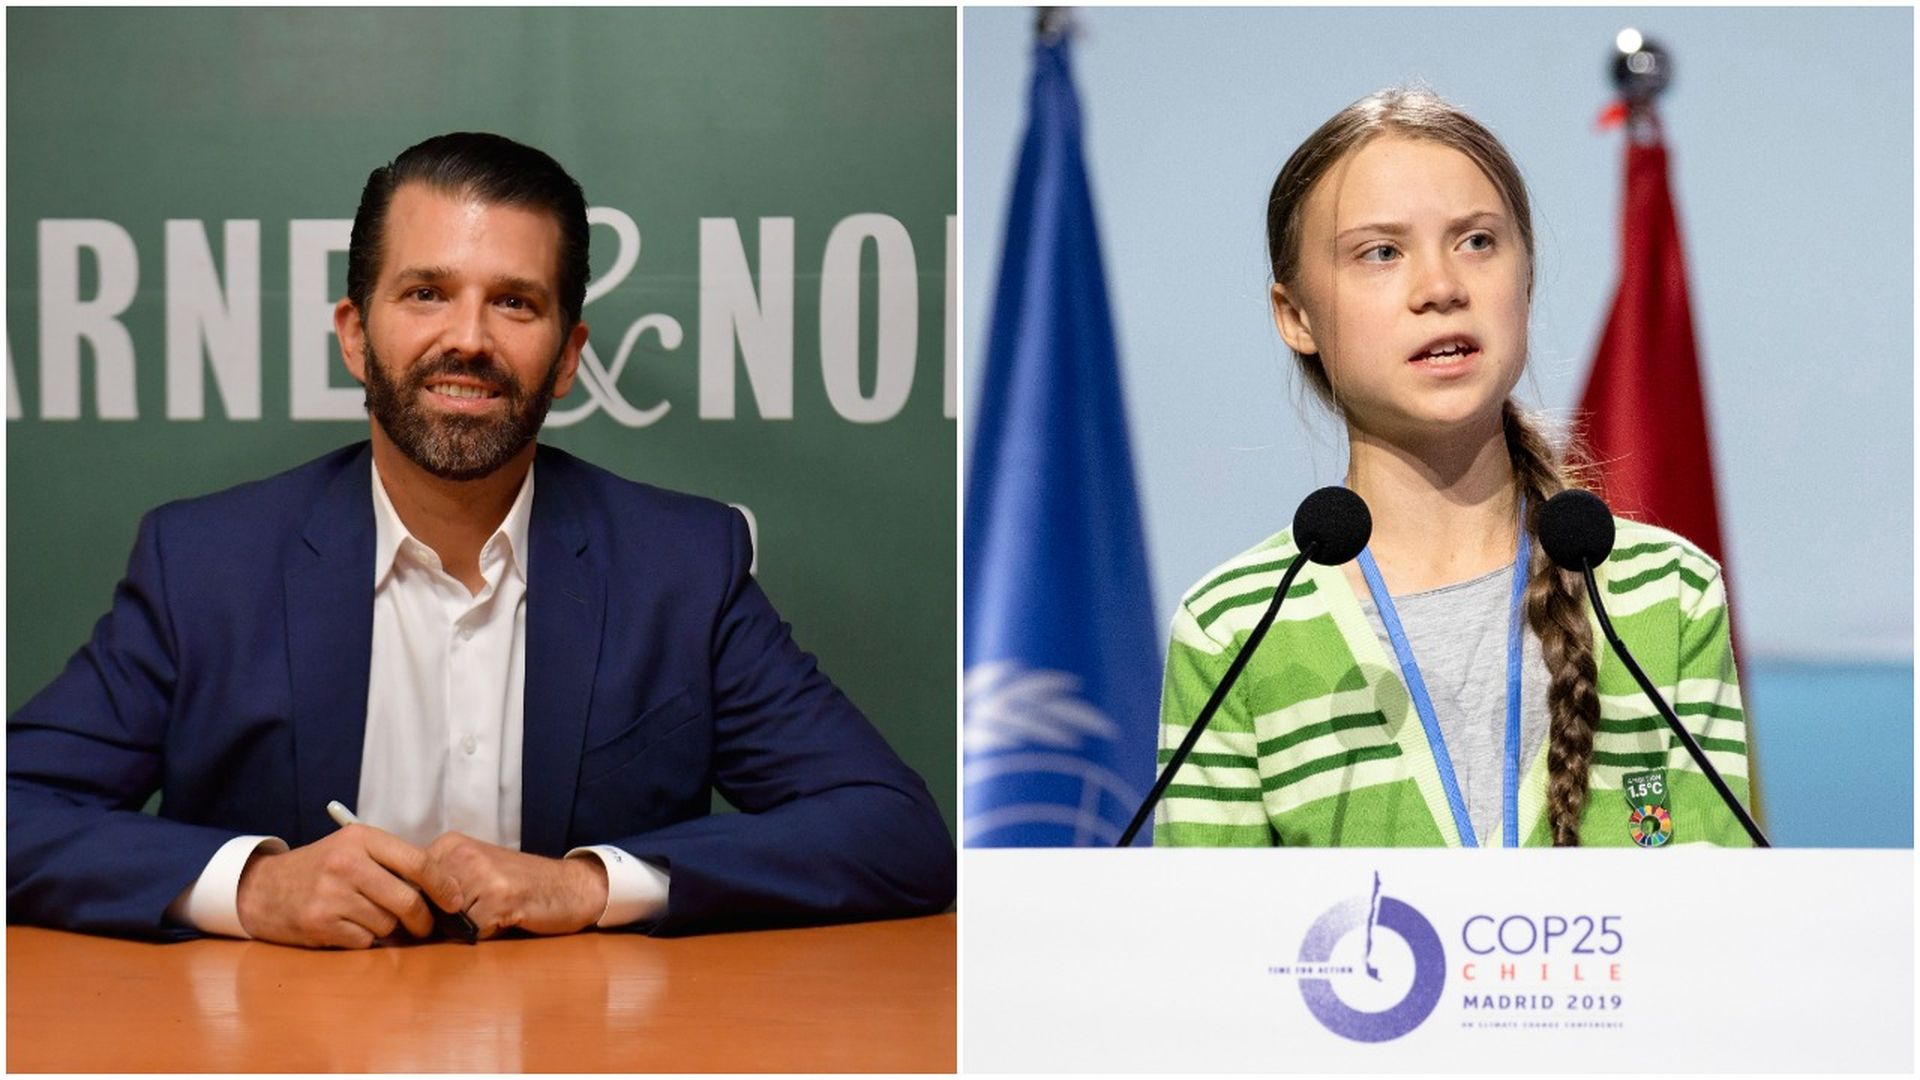 Donald Trump Jr. and Greta Thunberg